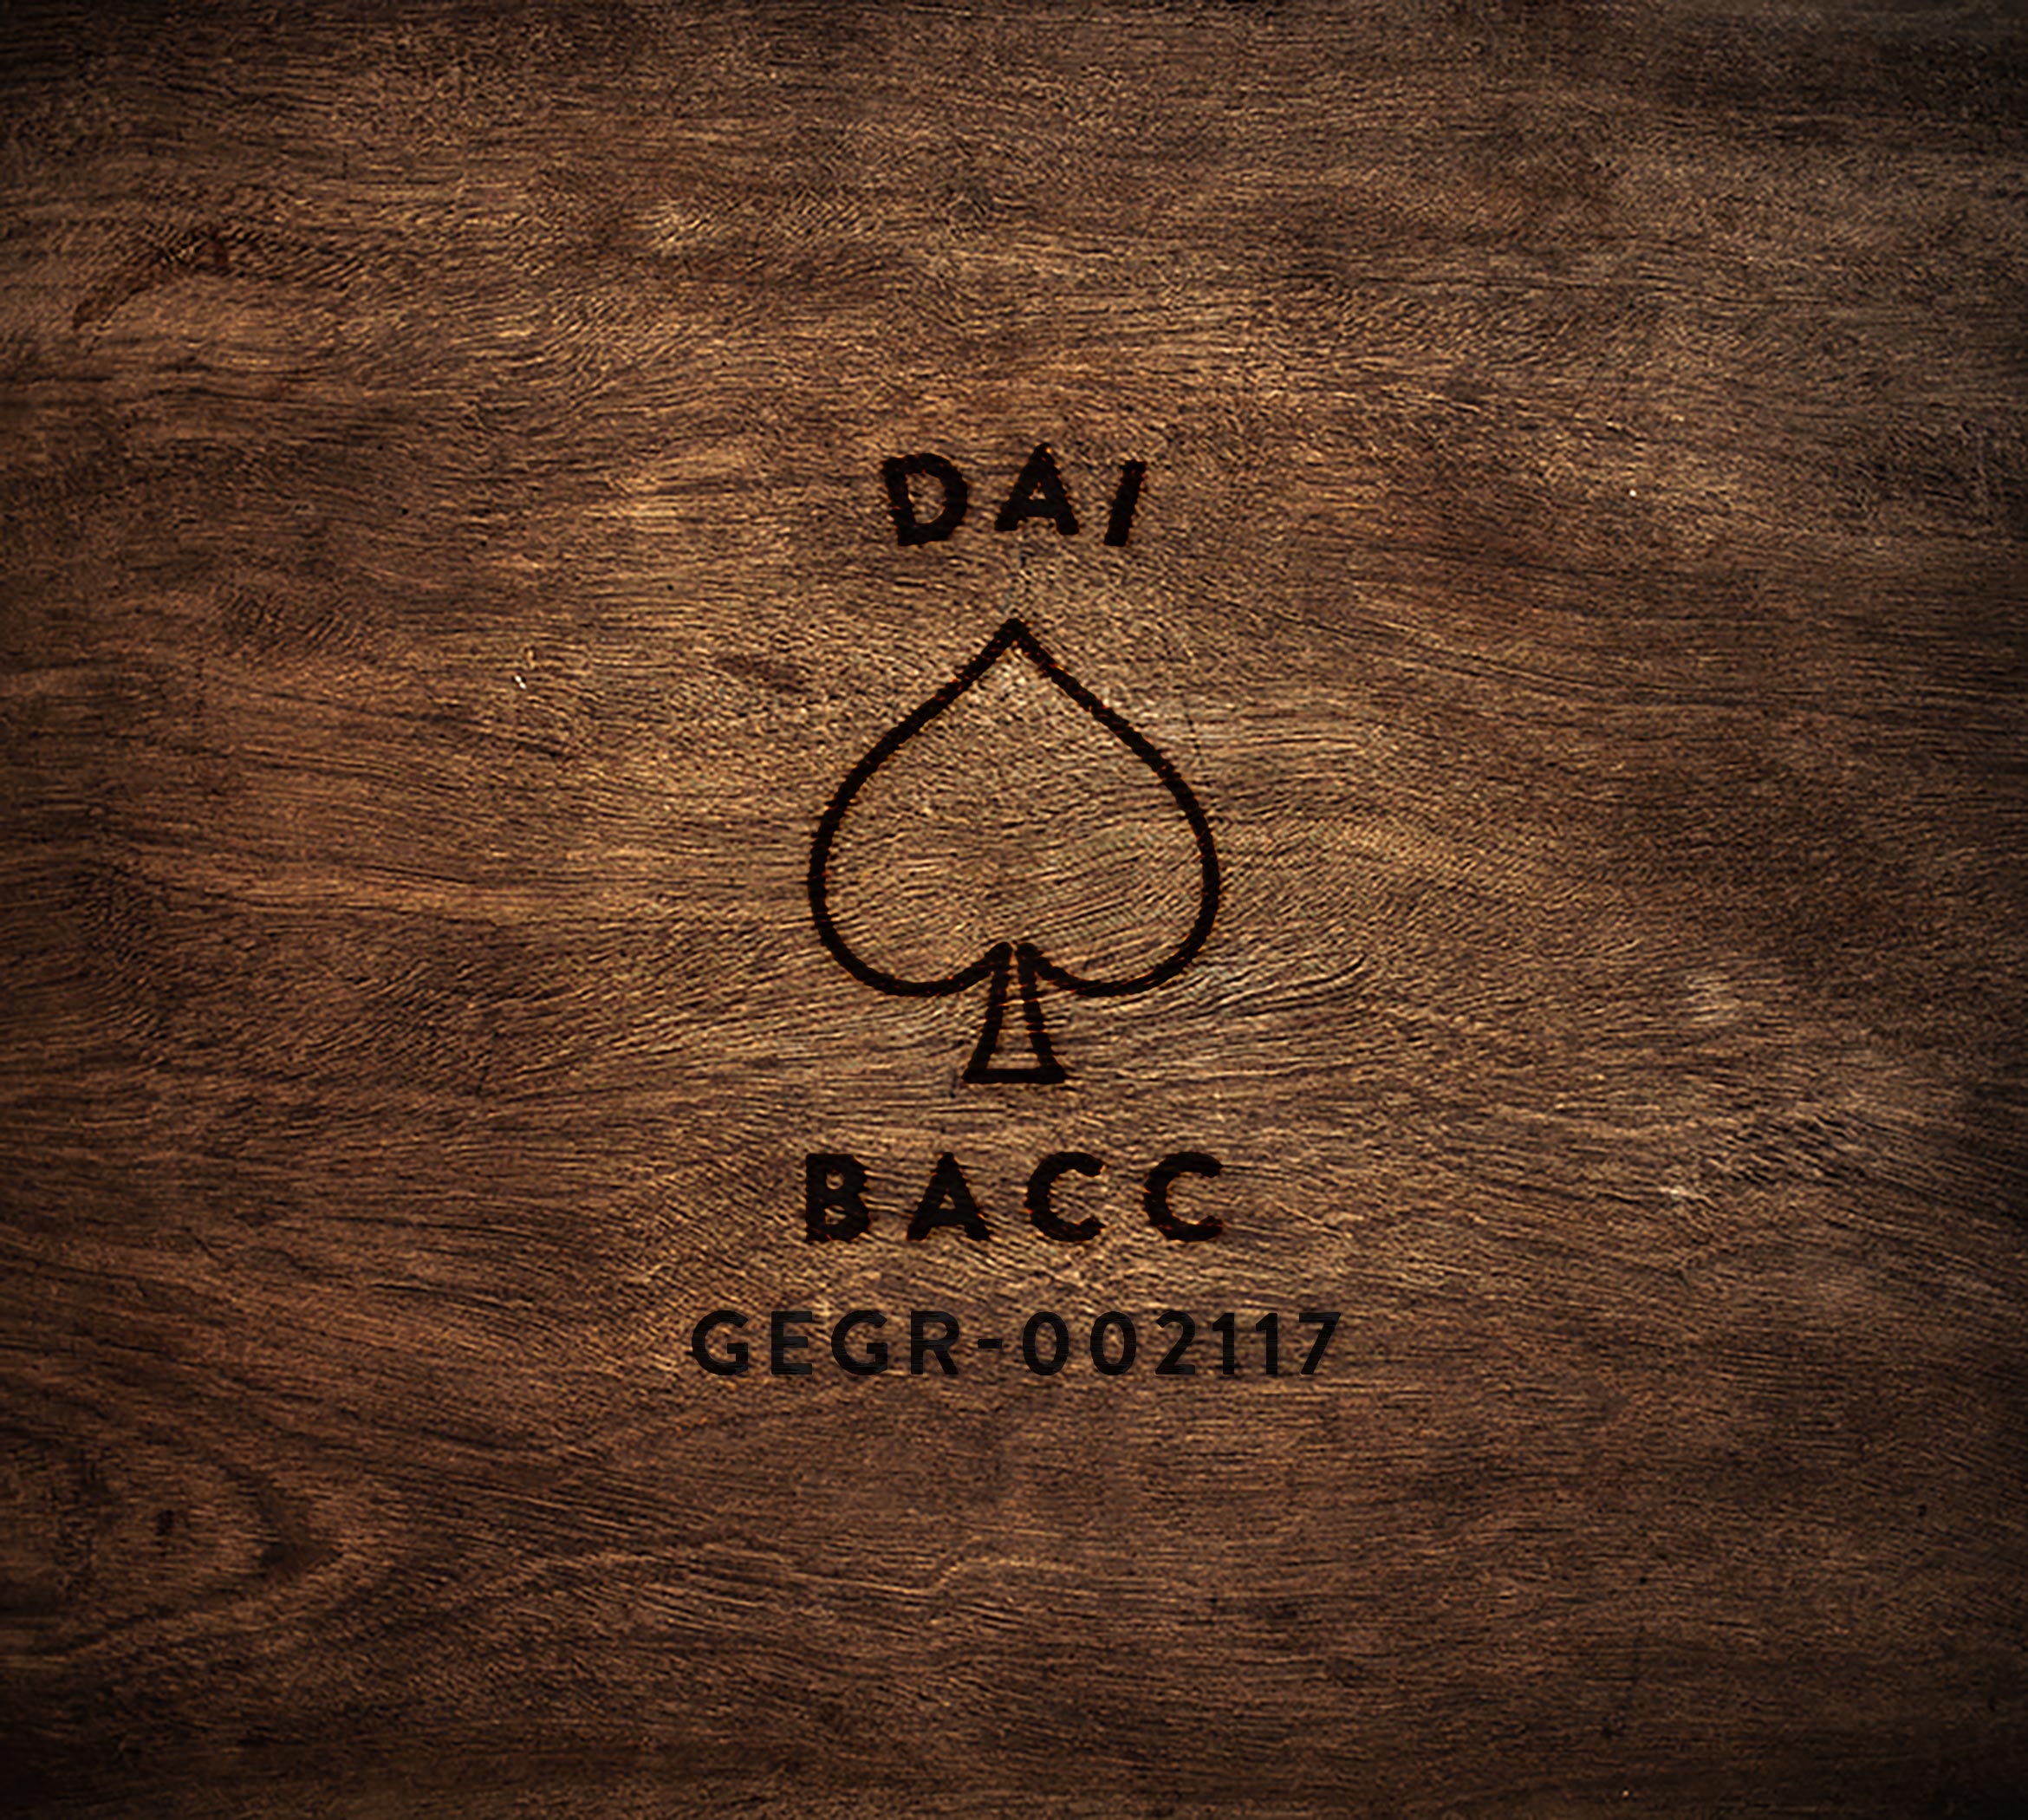 Dai Bacc GEGR-002117 wood square